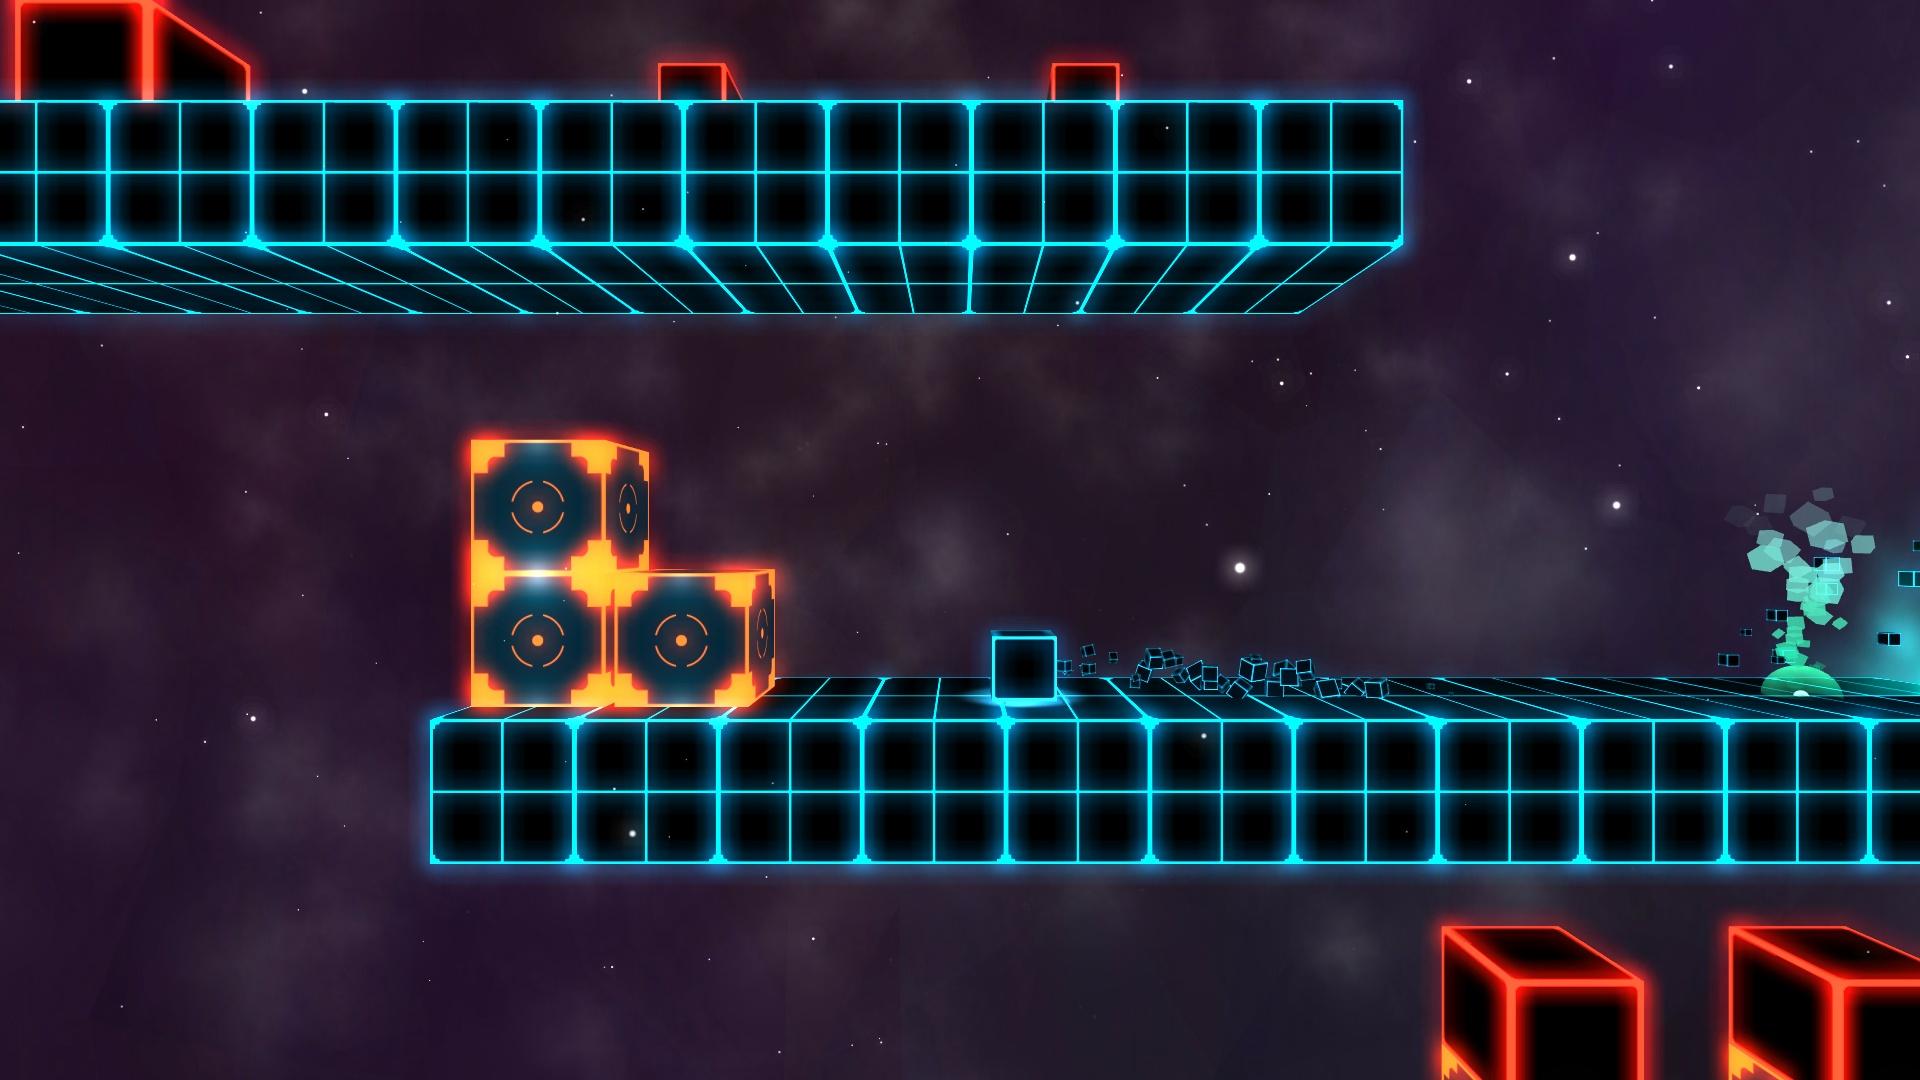 Screenshot №7 from game Cube Runner